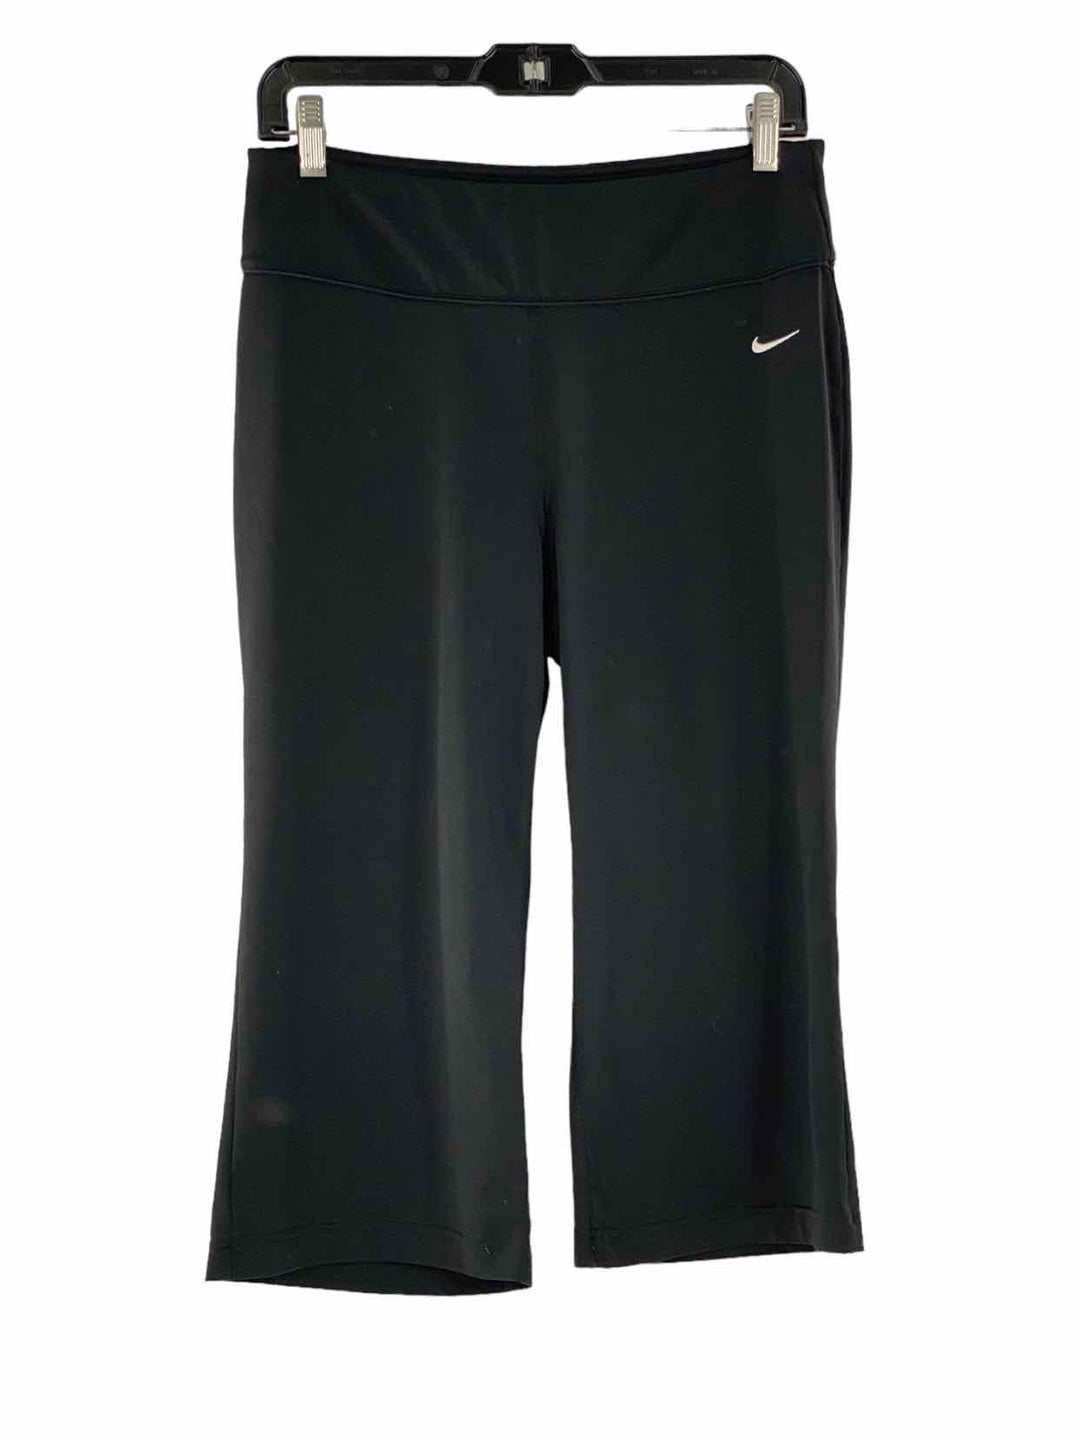 Nike Size M Black Athletic Pants